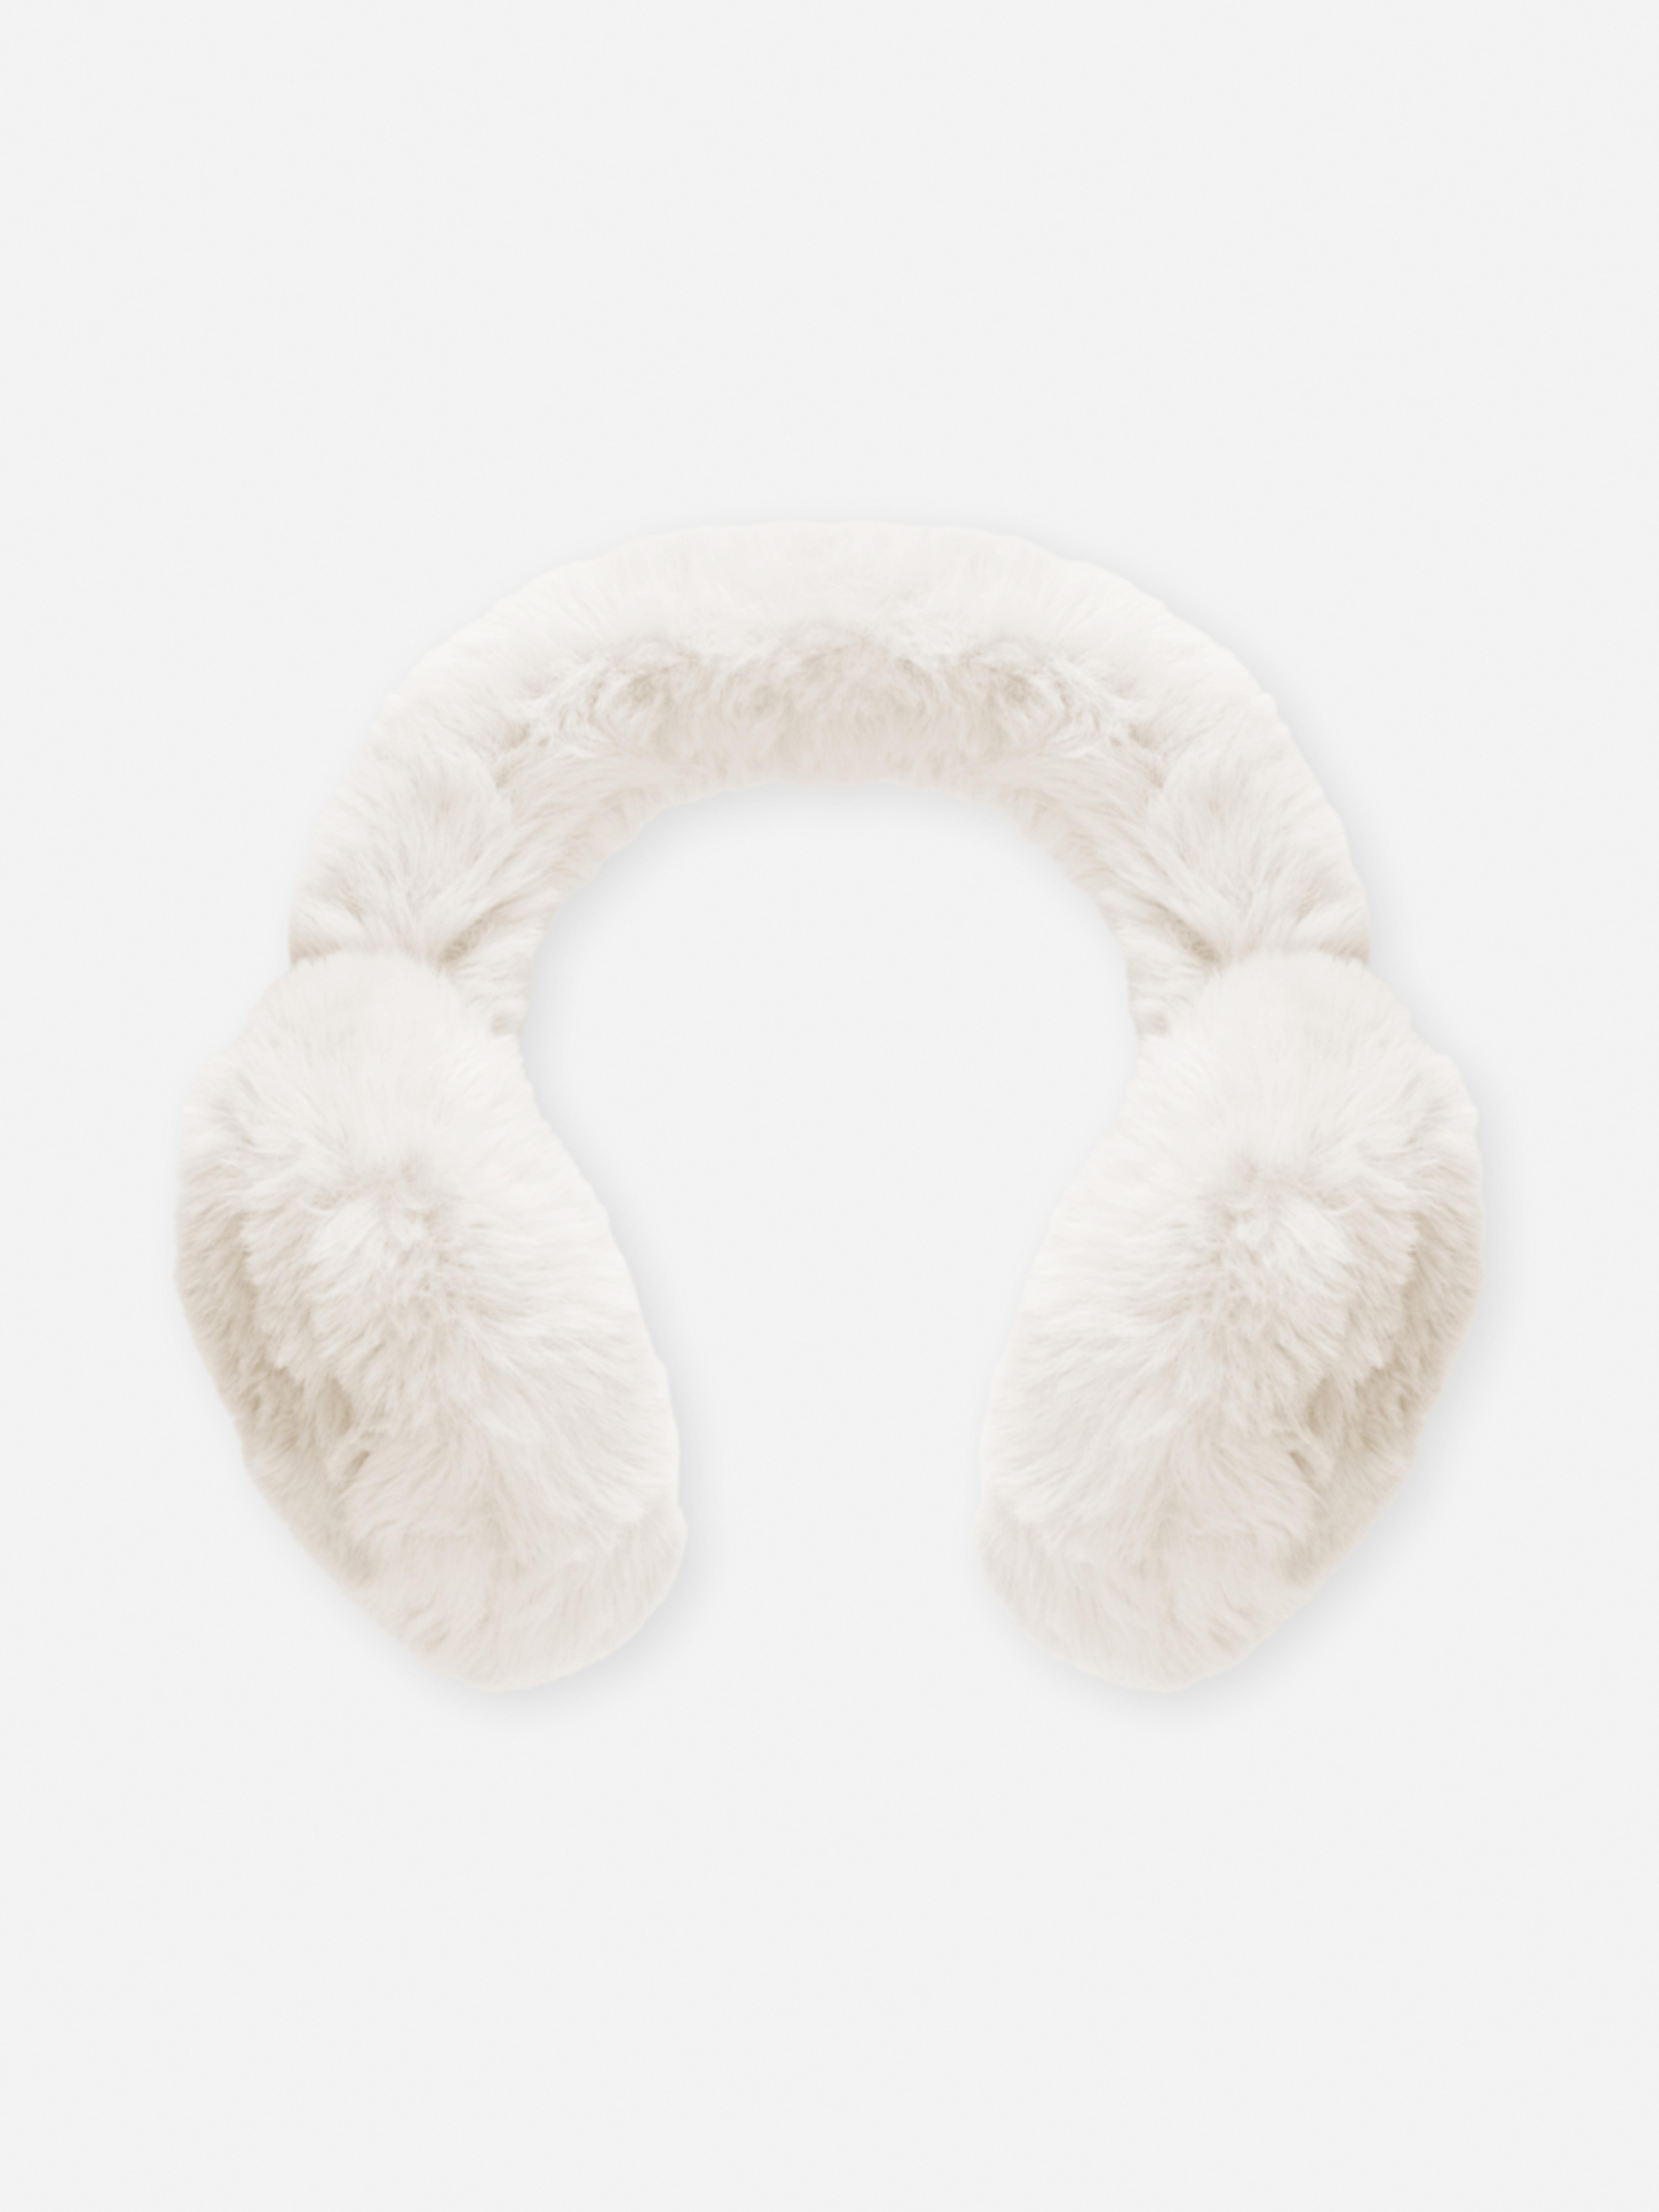 „Rita Ora“ Ohrenschützer aus Kunstfell